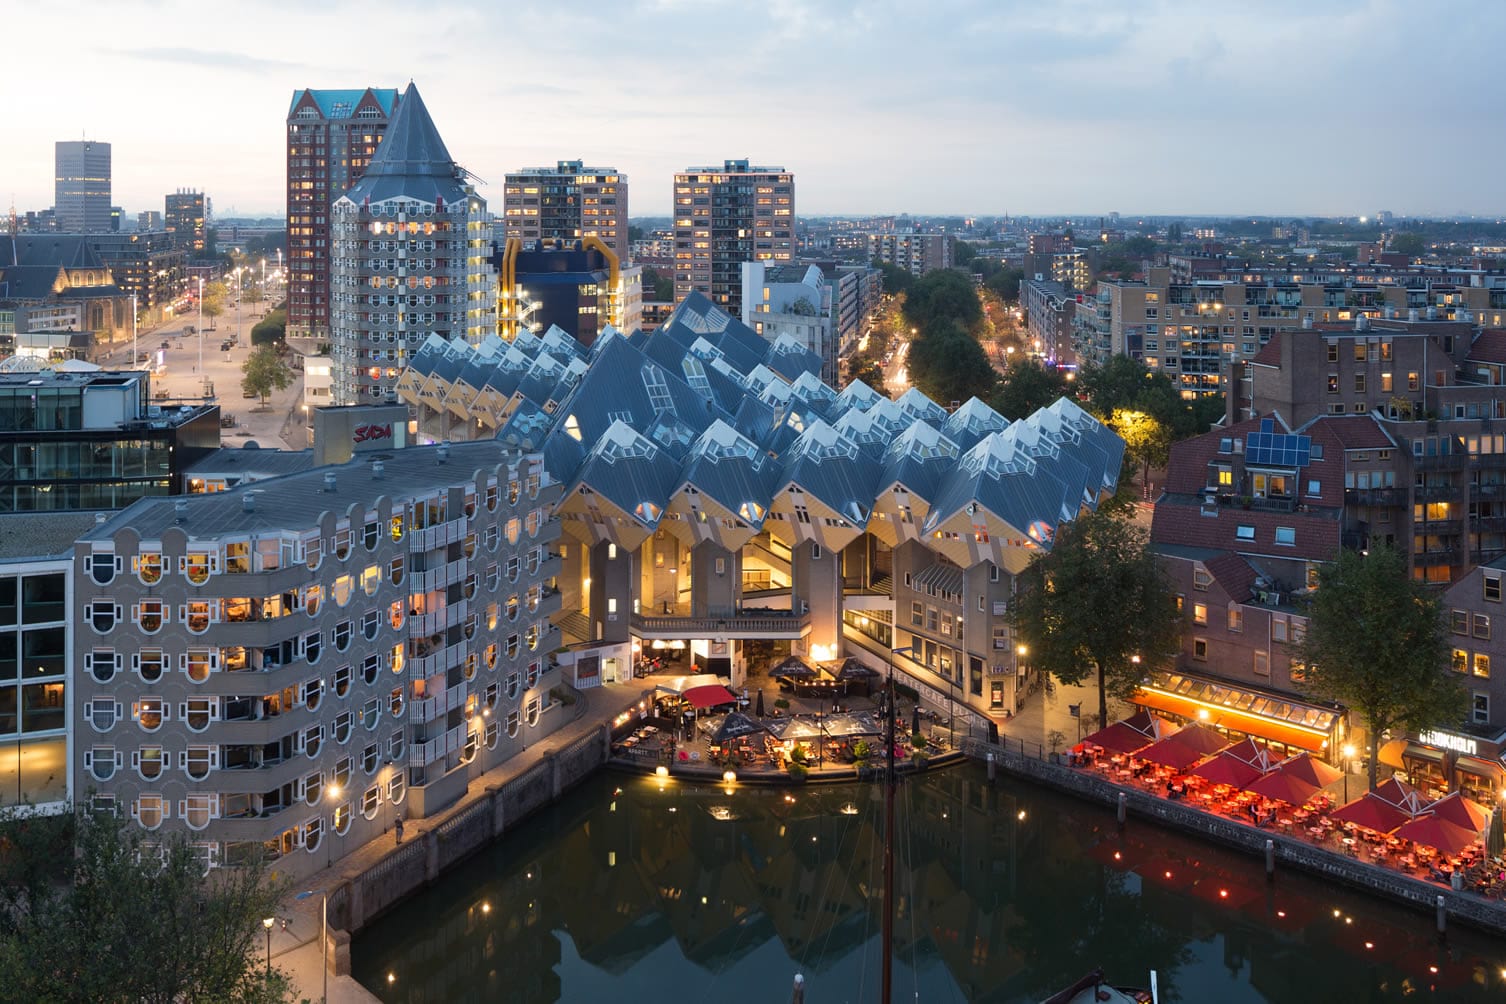 Eurovision 2020 Rotterdam's City Council approves ESC bid